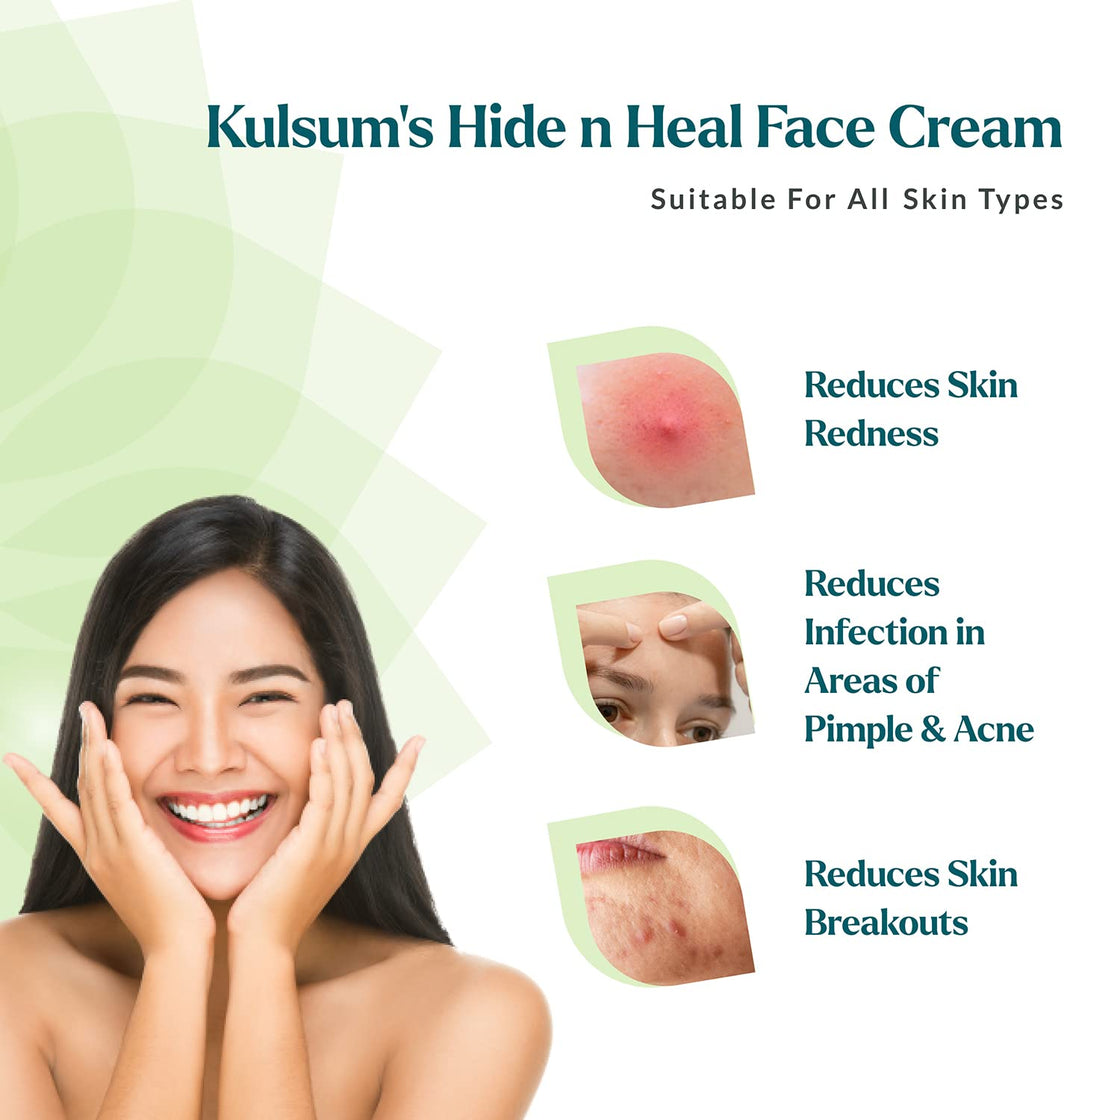 Kulsum's kayakalp Hide N Heal Face Cream (200gm)